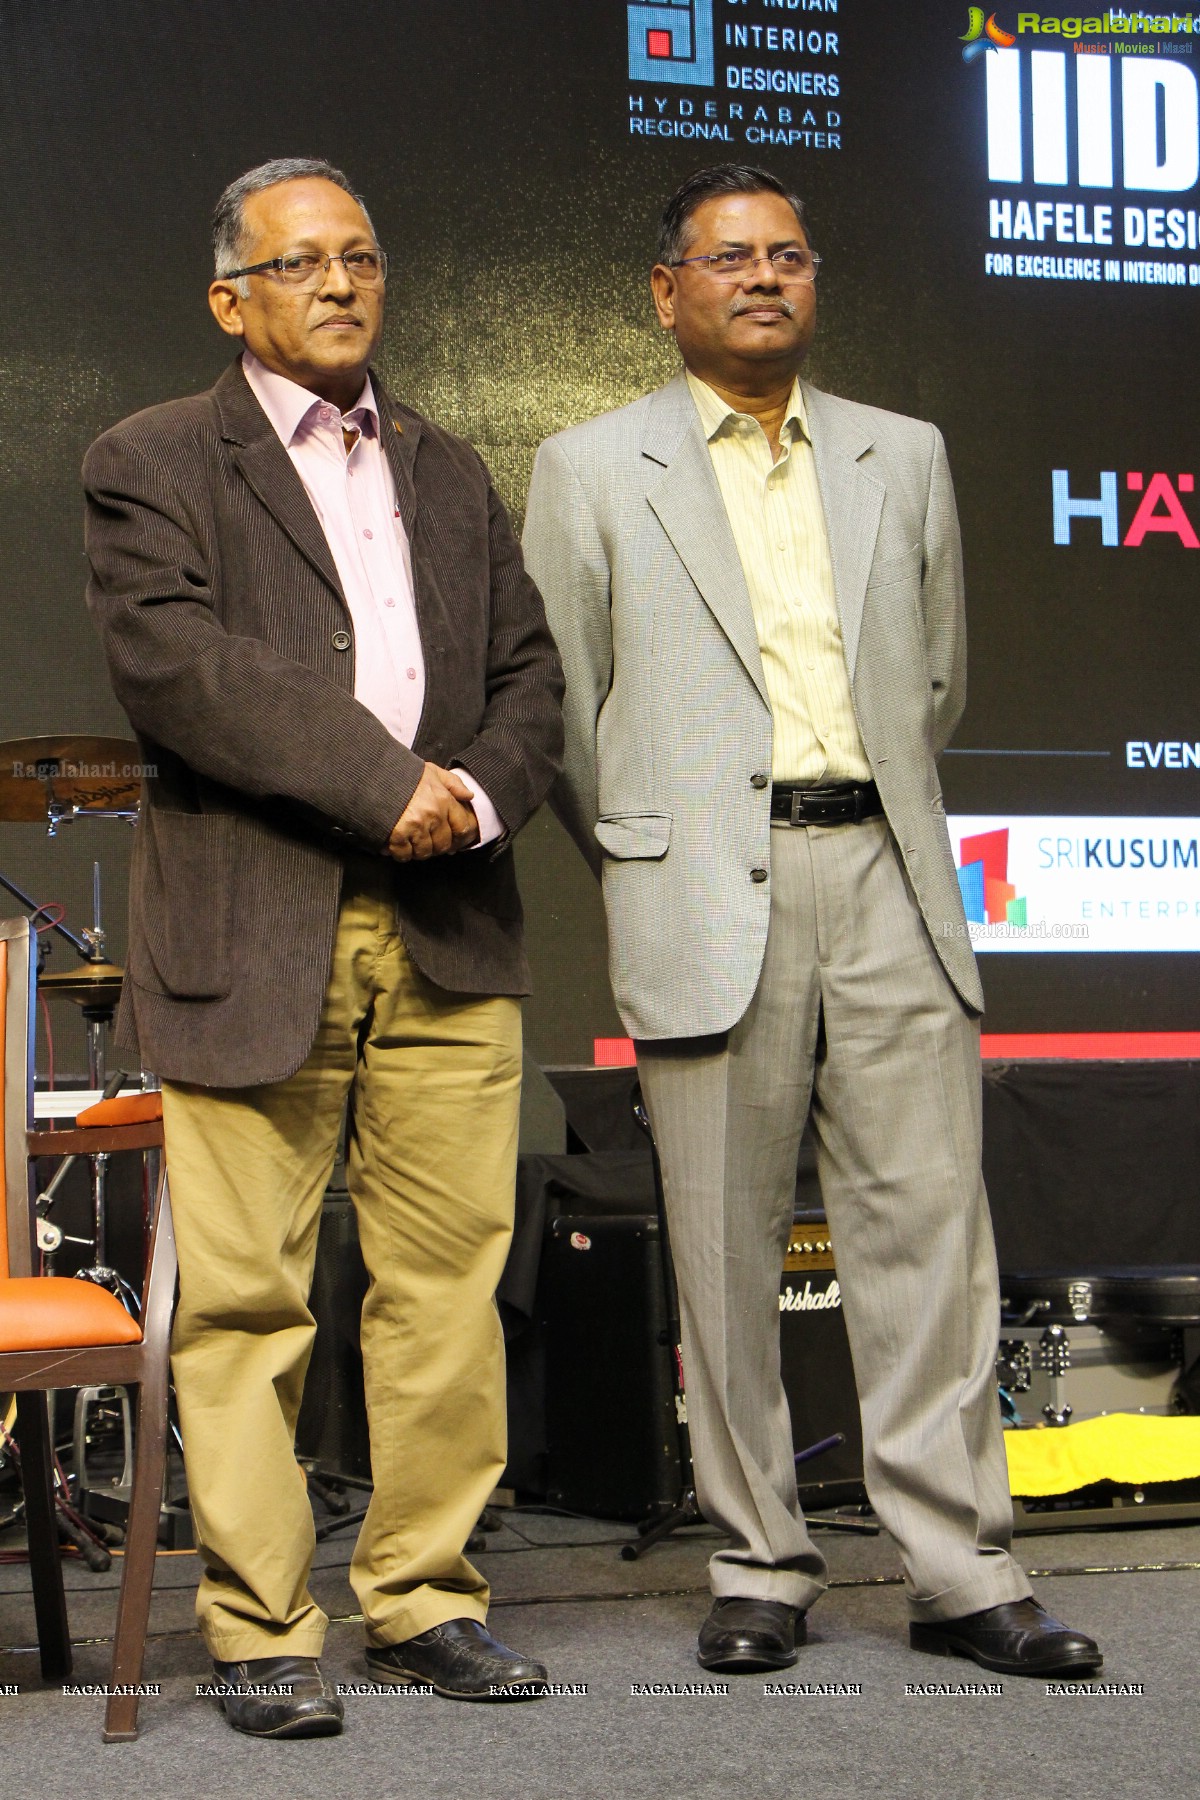 IIID HRC Hafele Design Awards 2016 at Trident Hotel, Madhapur, Hyderabad